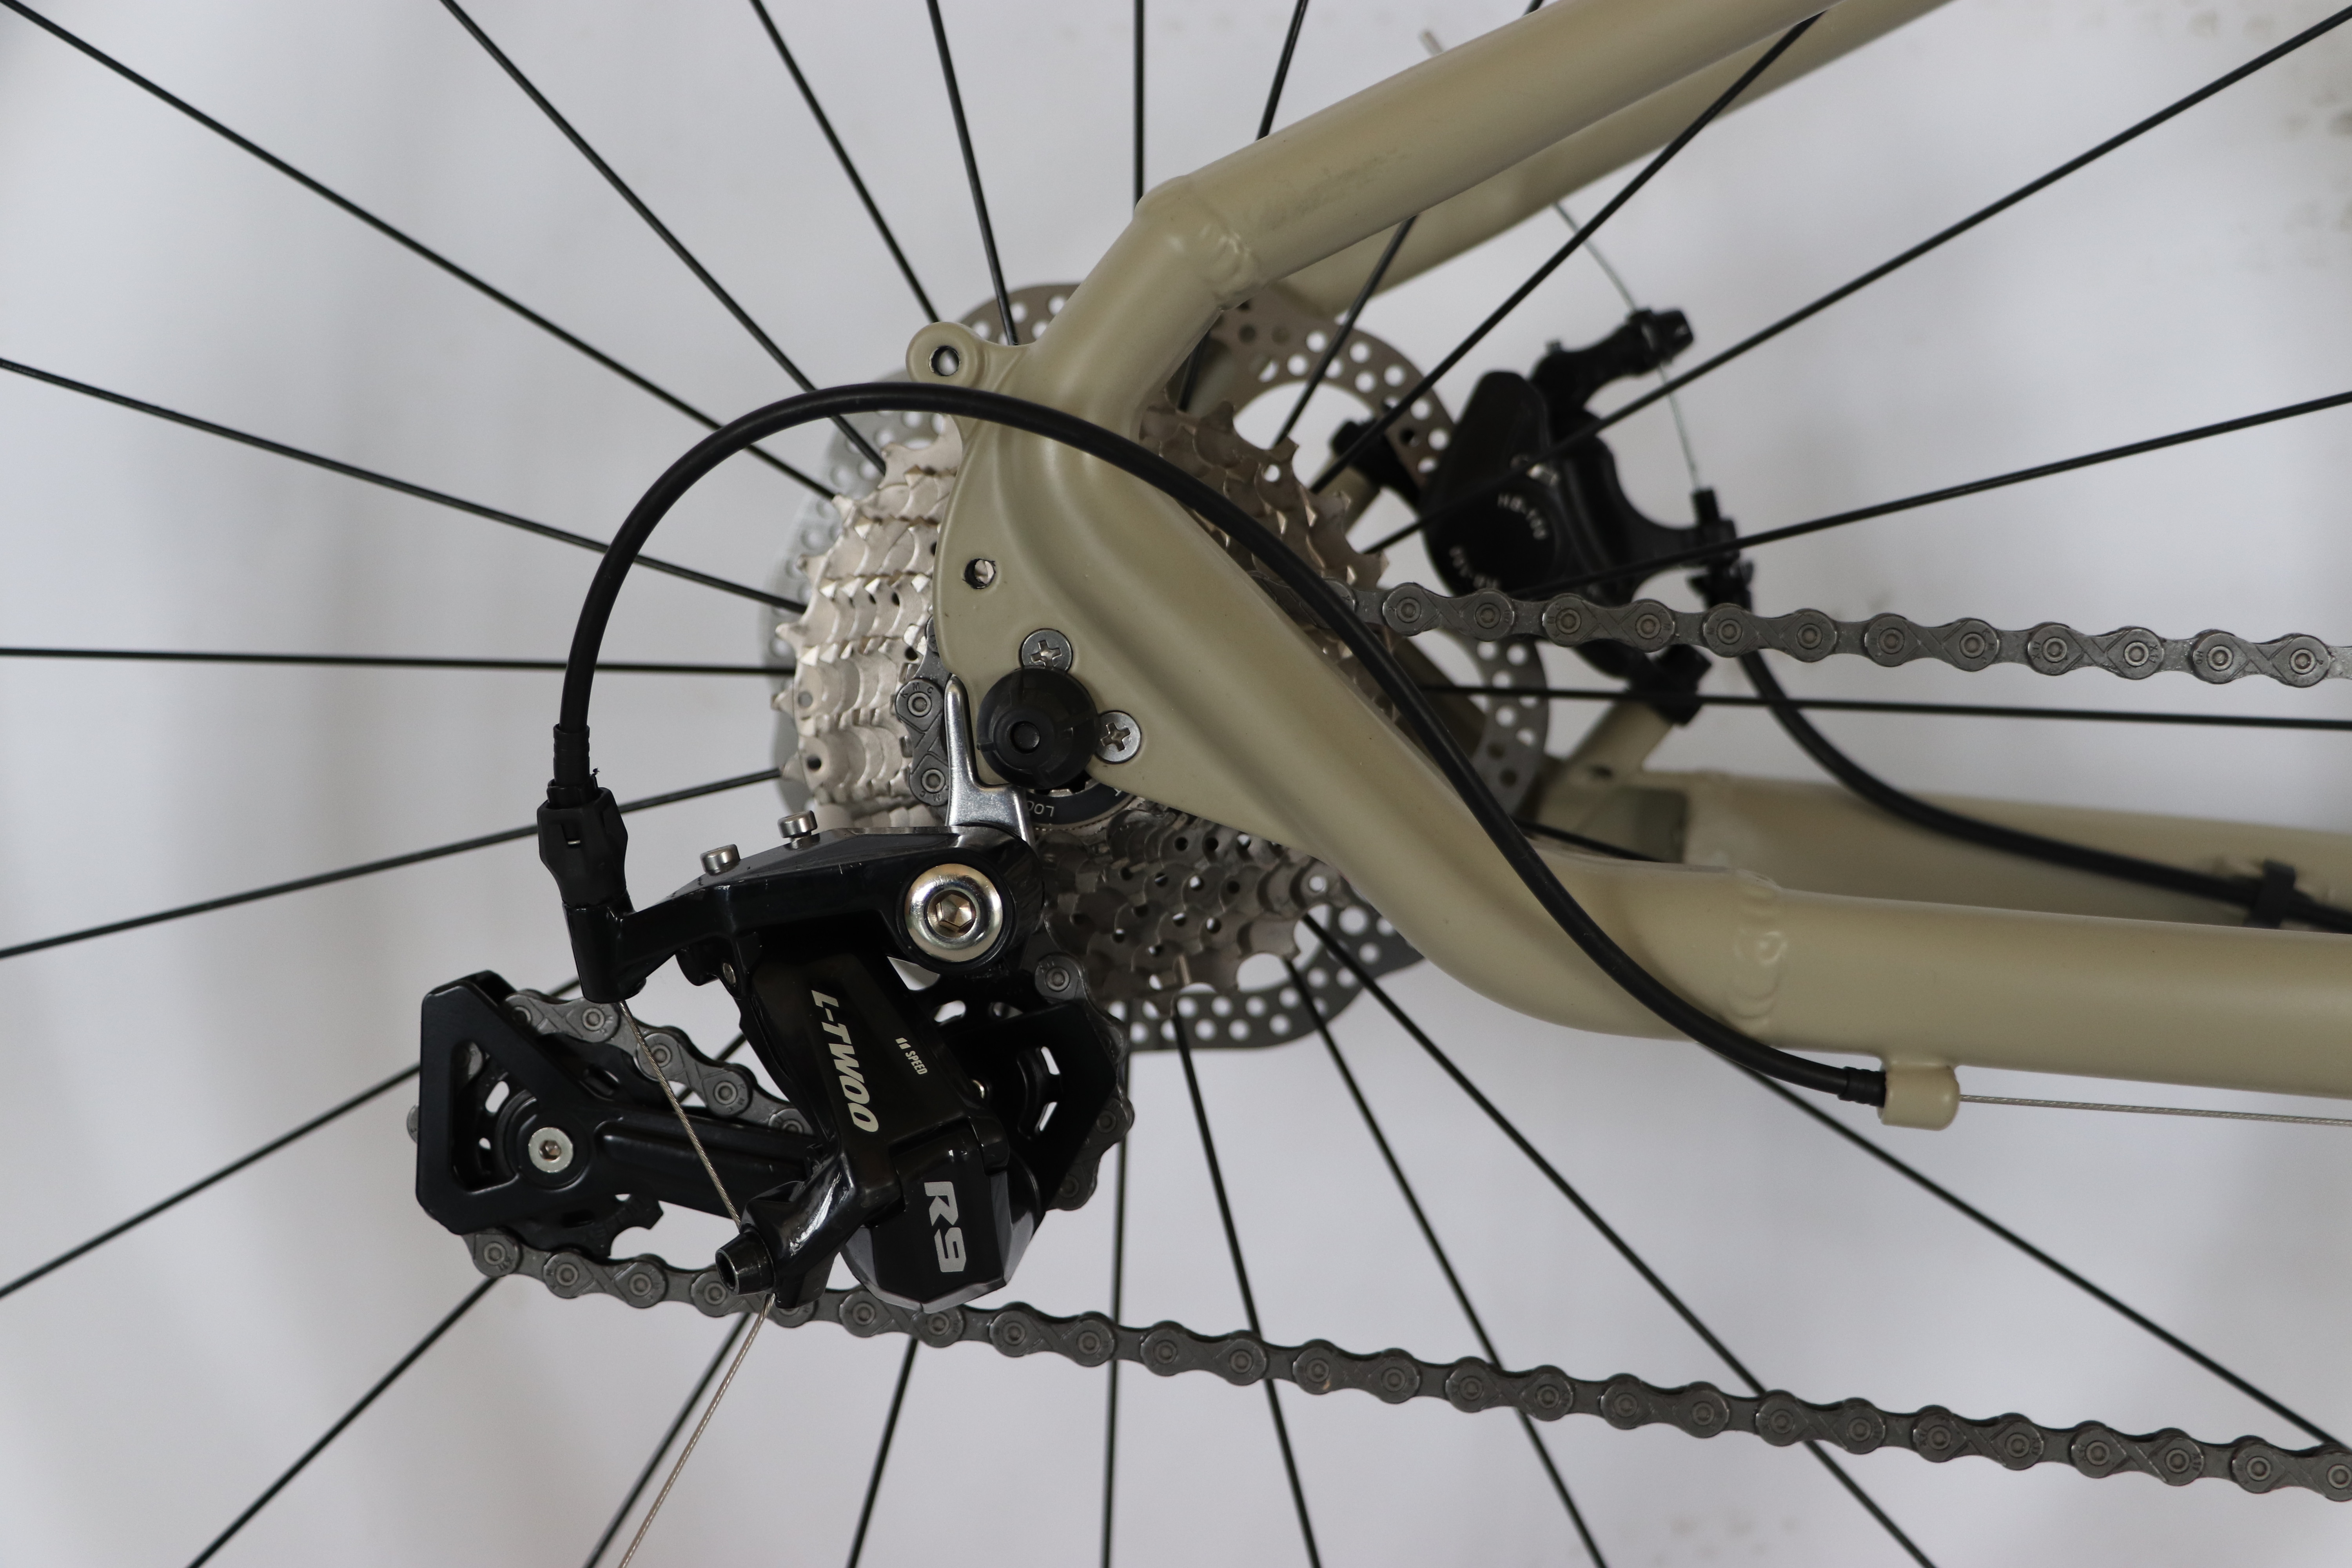 OEM Aluminum alloy rim and pedal road cycle Disc brake road bicycle 700C Curved handlebars road bike